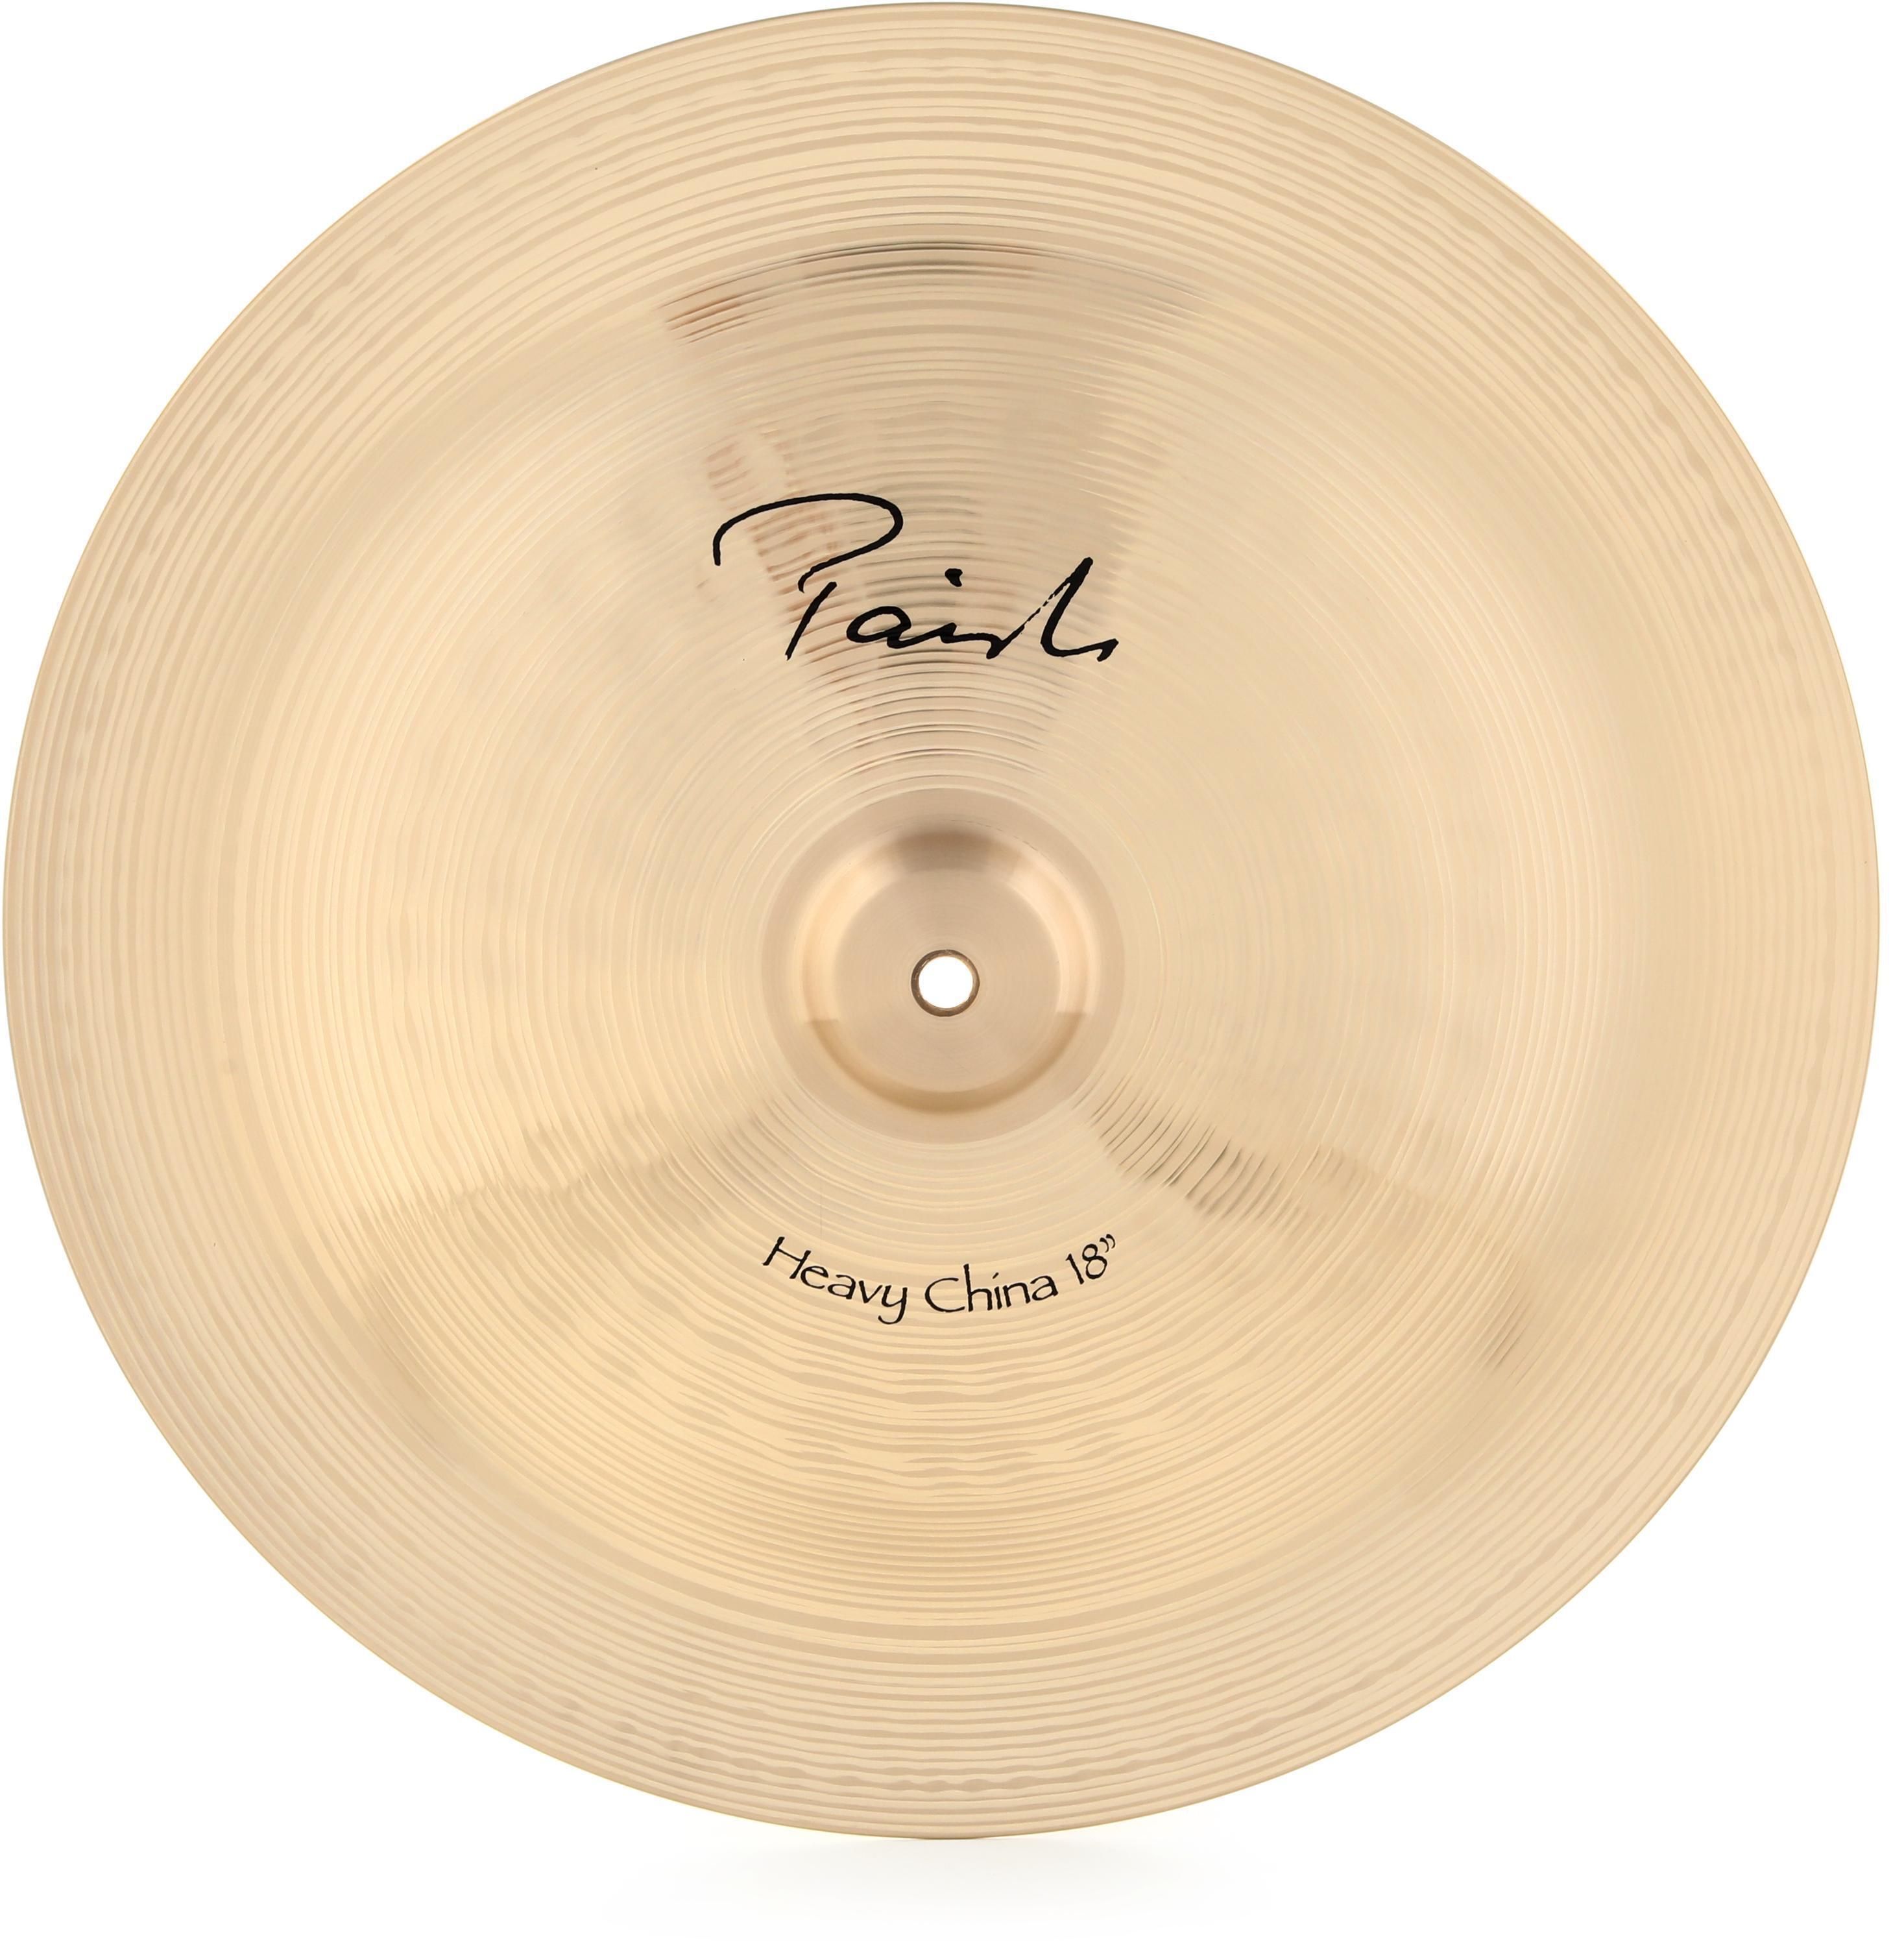 Paiste 18 inch Signature Heavy China Cymbal